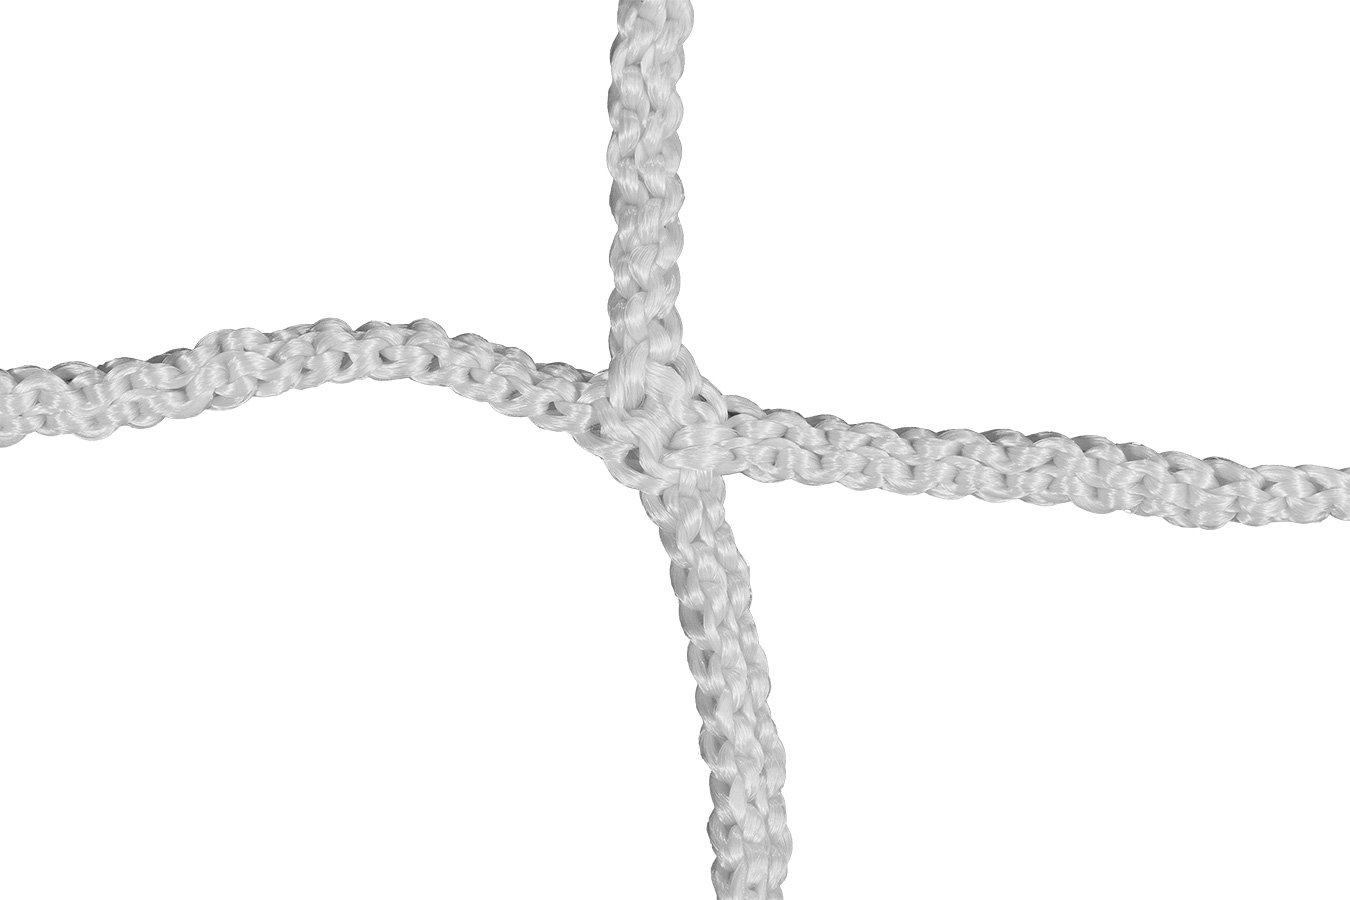 Kwikgoal 3mm Solid Braid Knotless Net | 3B5821 Nets Kwikgoal 